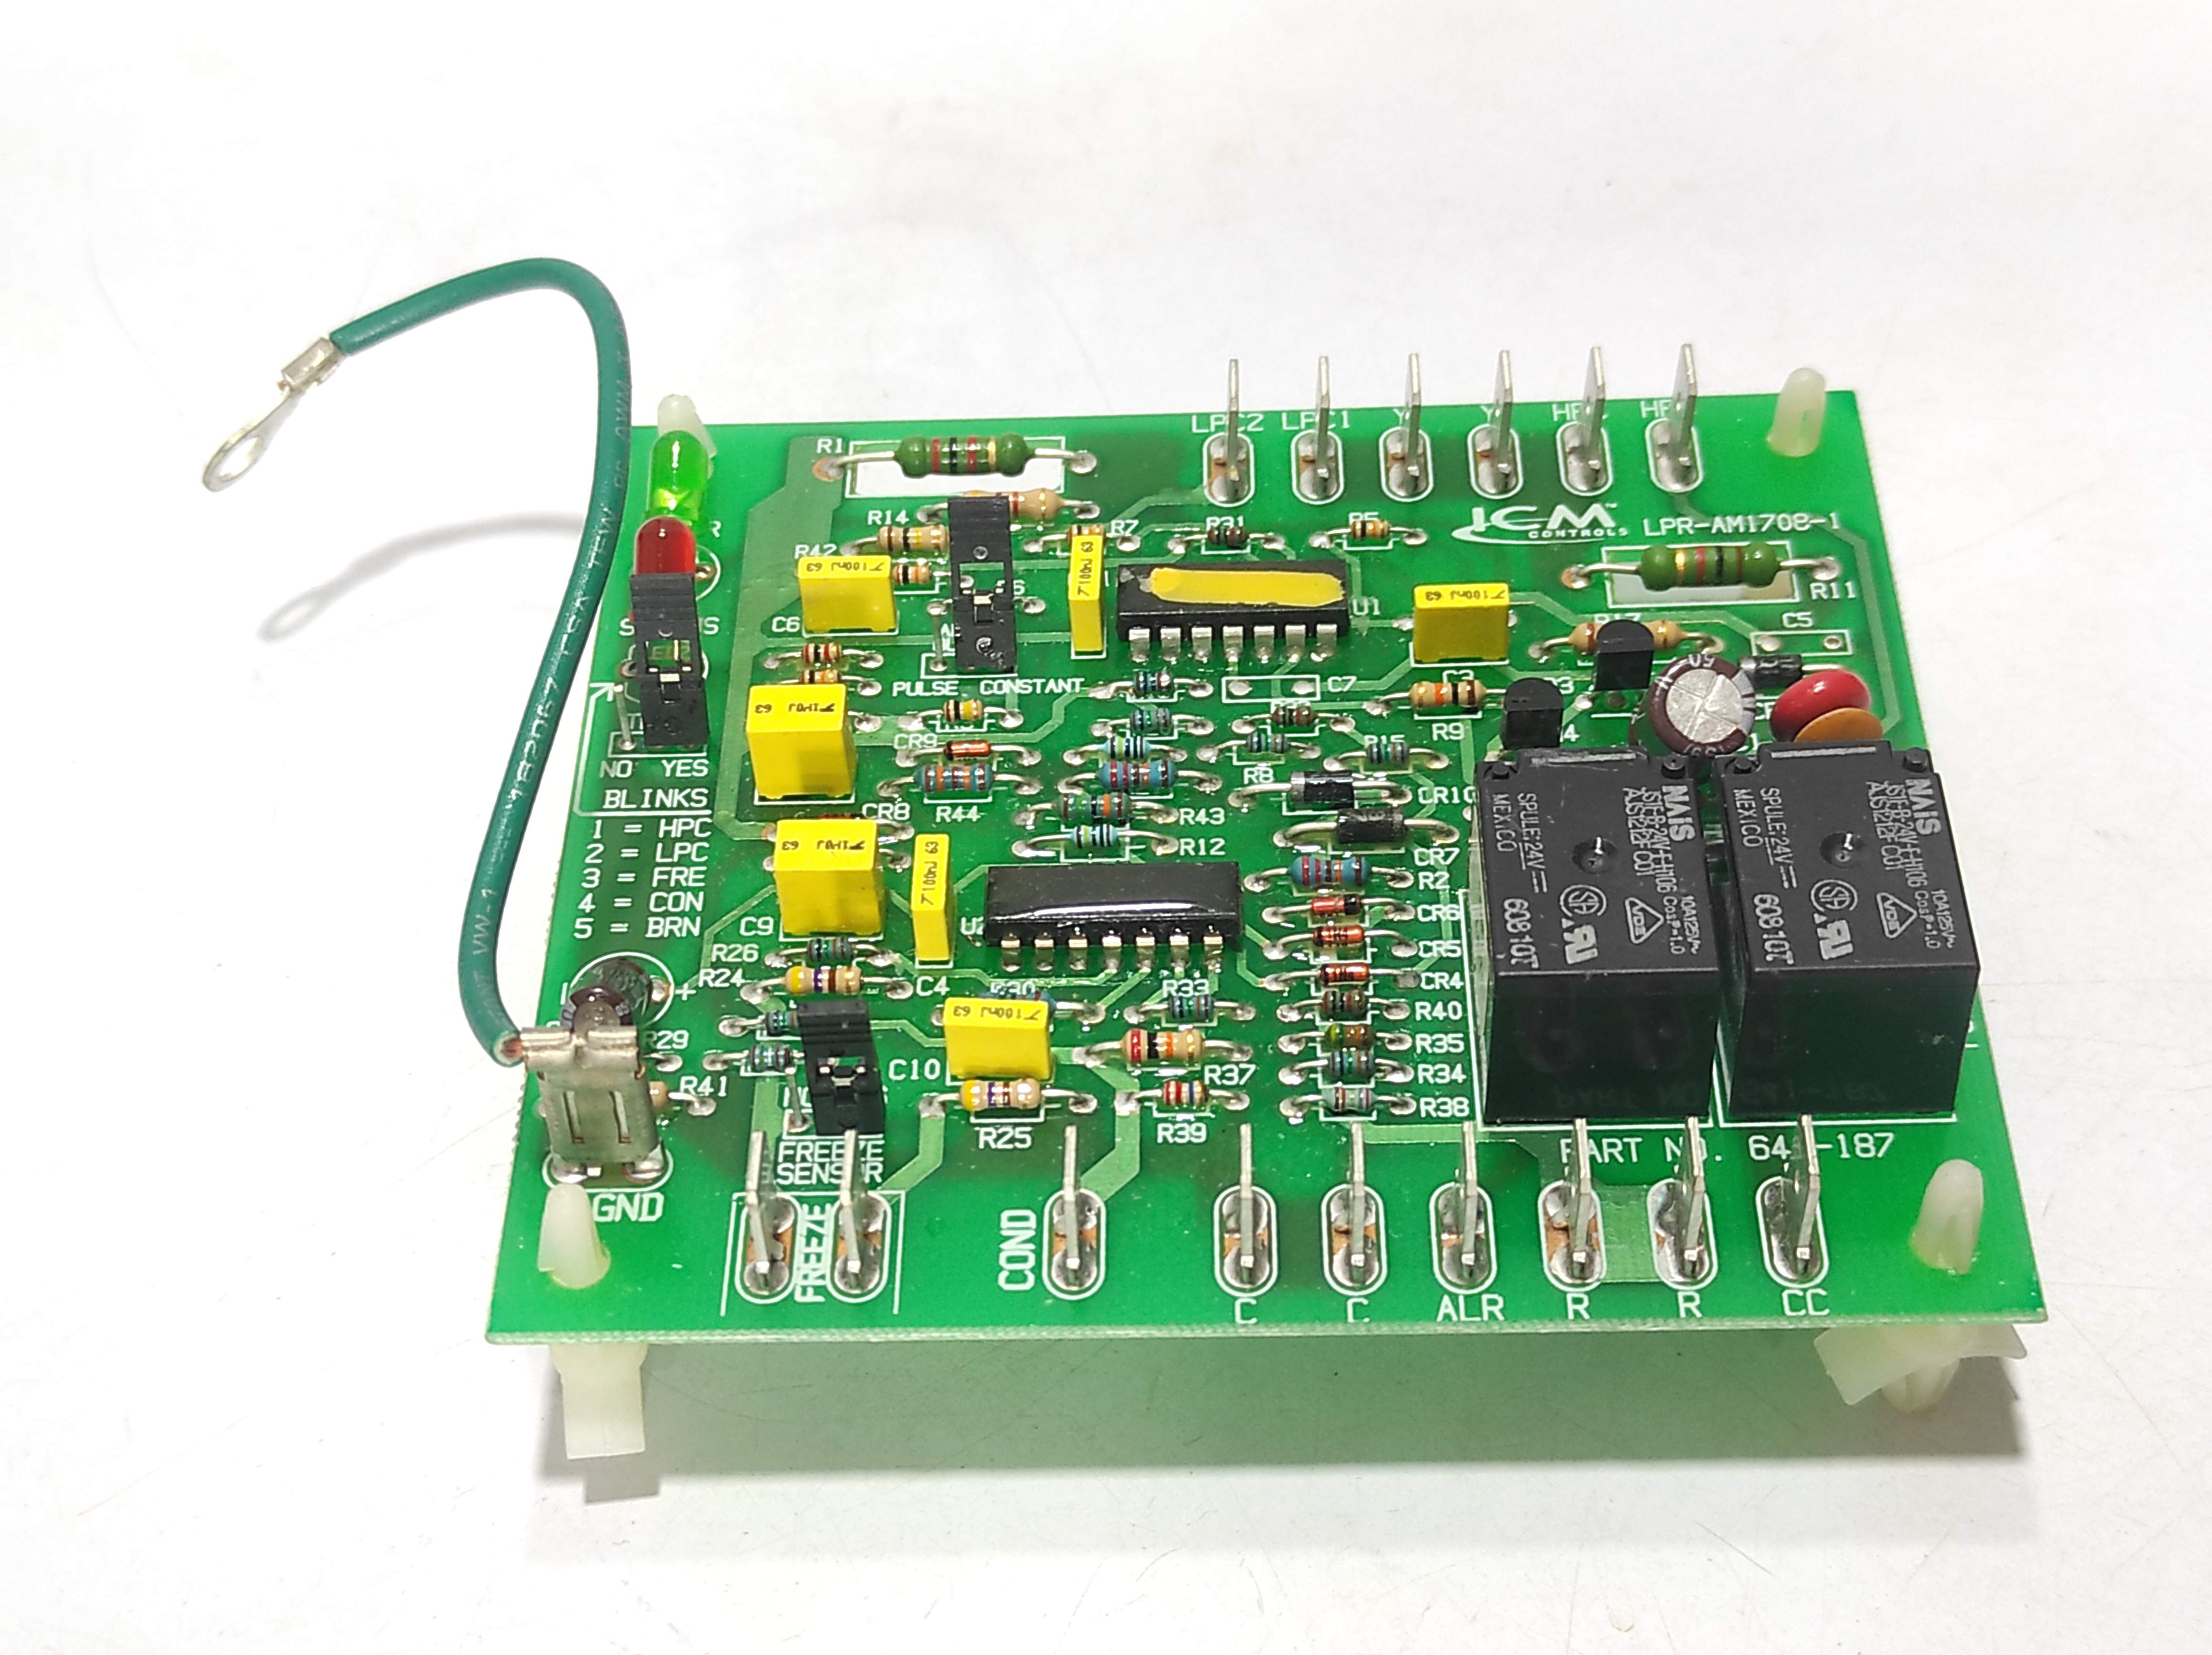 ICM Controls LPR-AM1708-1 641-187 PCB